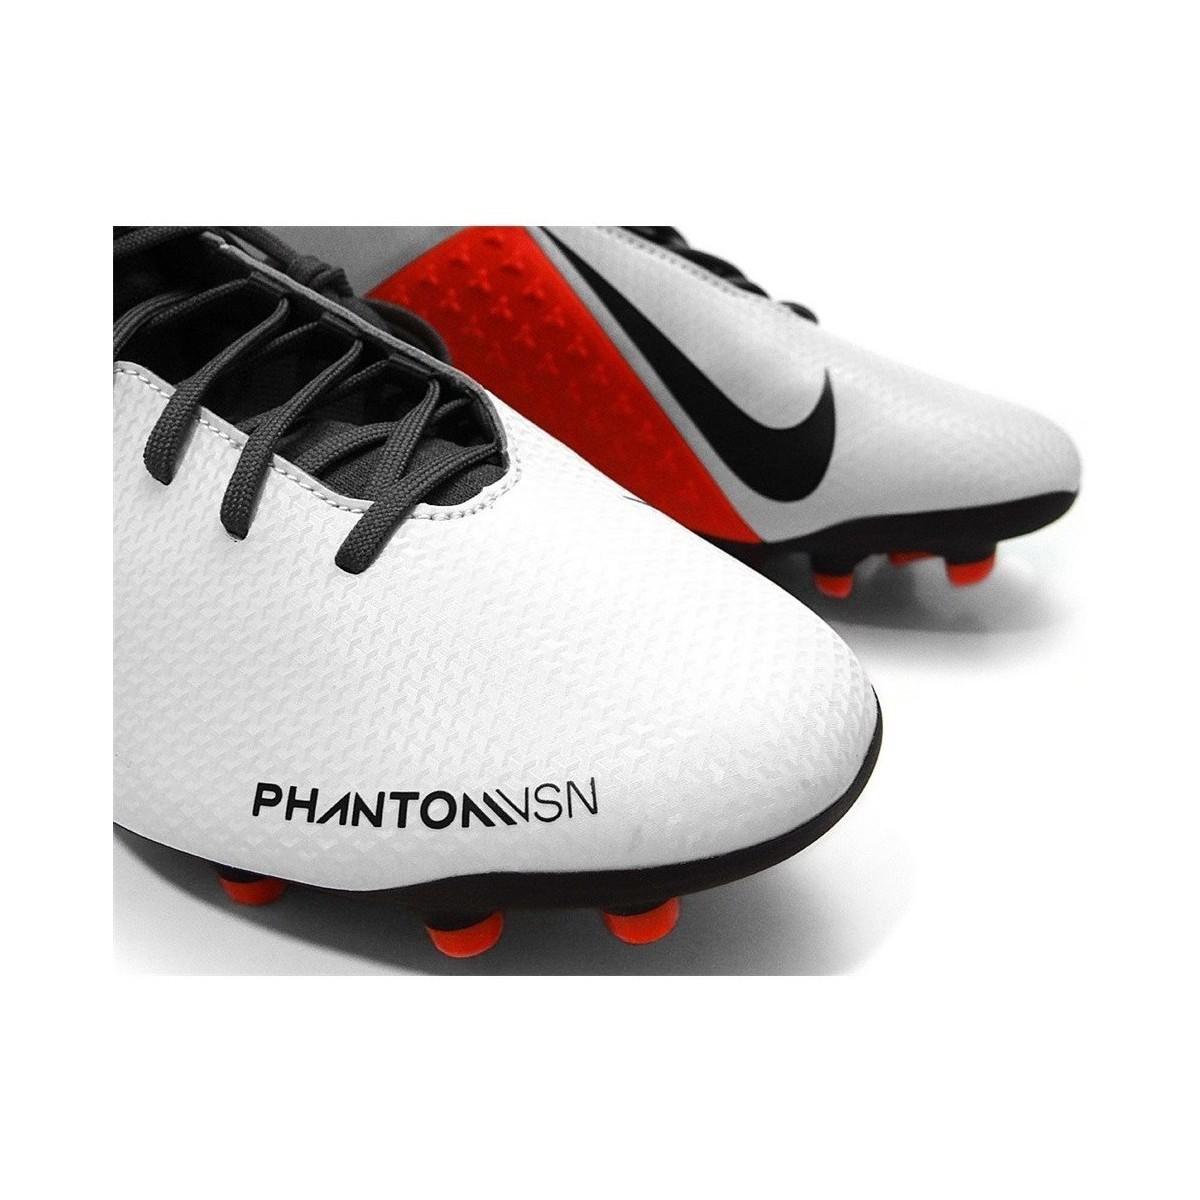 Nike WWC Hypervenom Phantom 2 Review + On YouTube